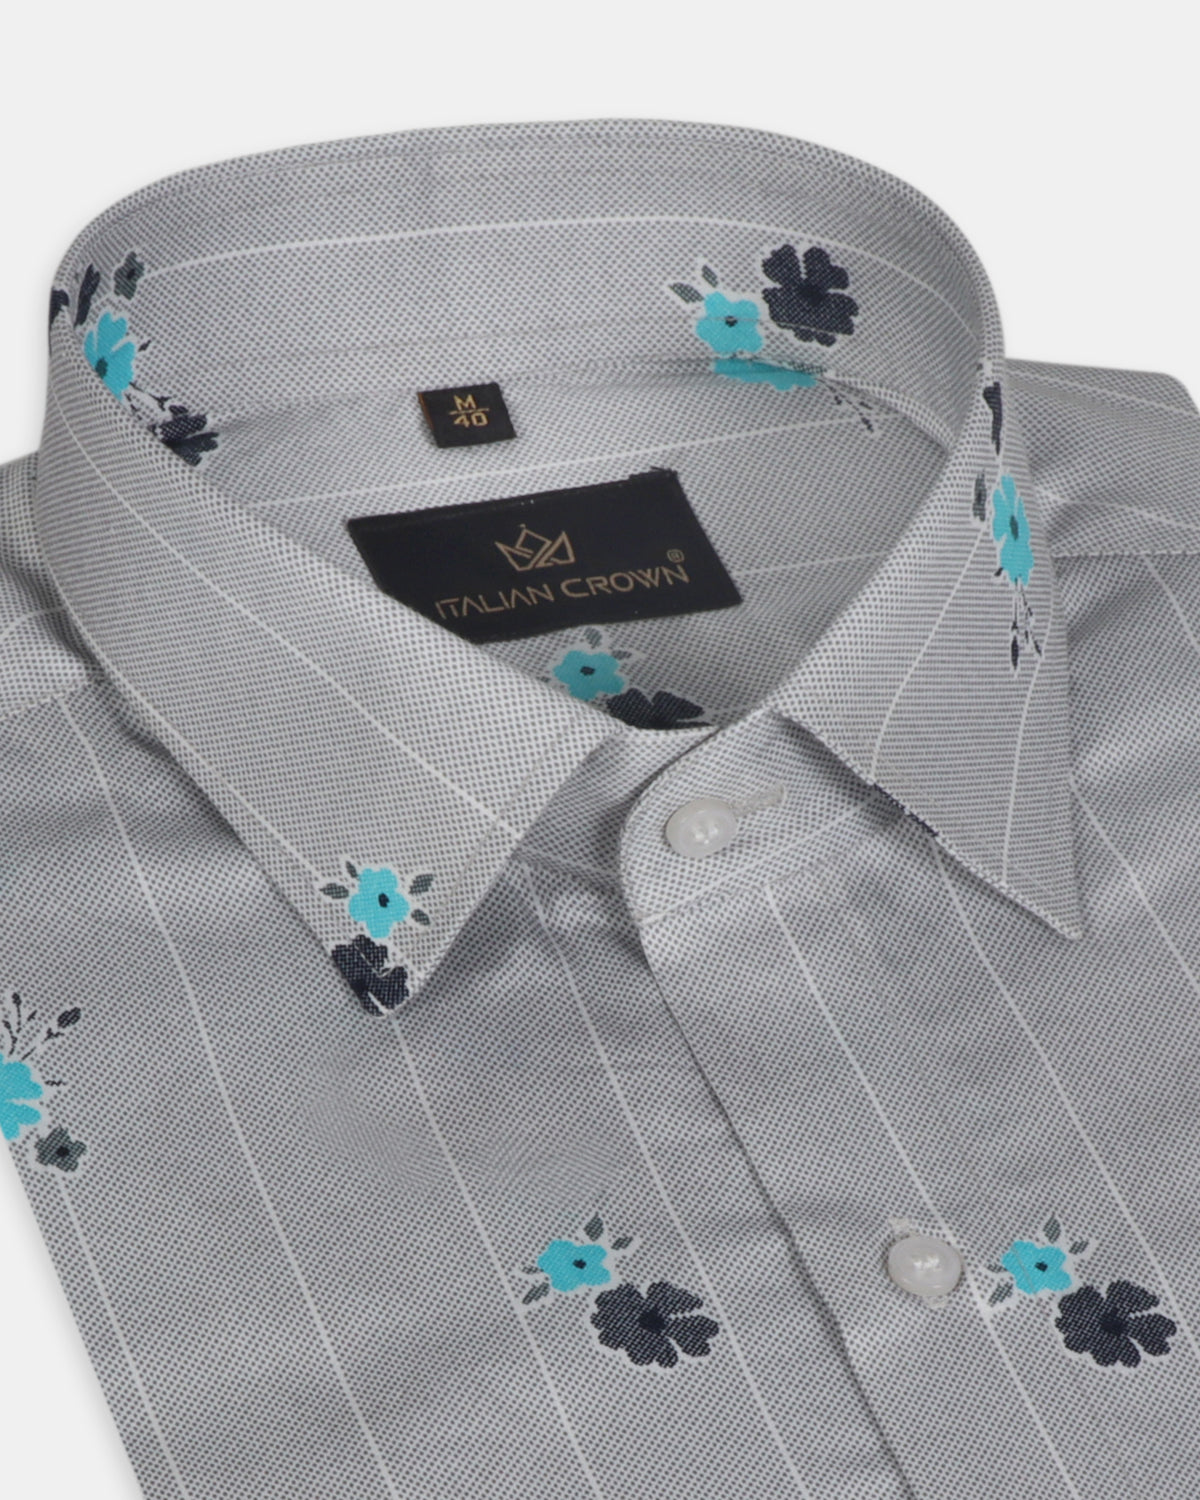 floral printed shirt